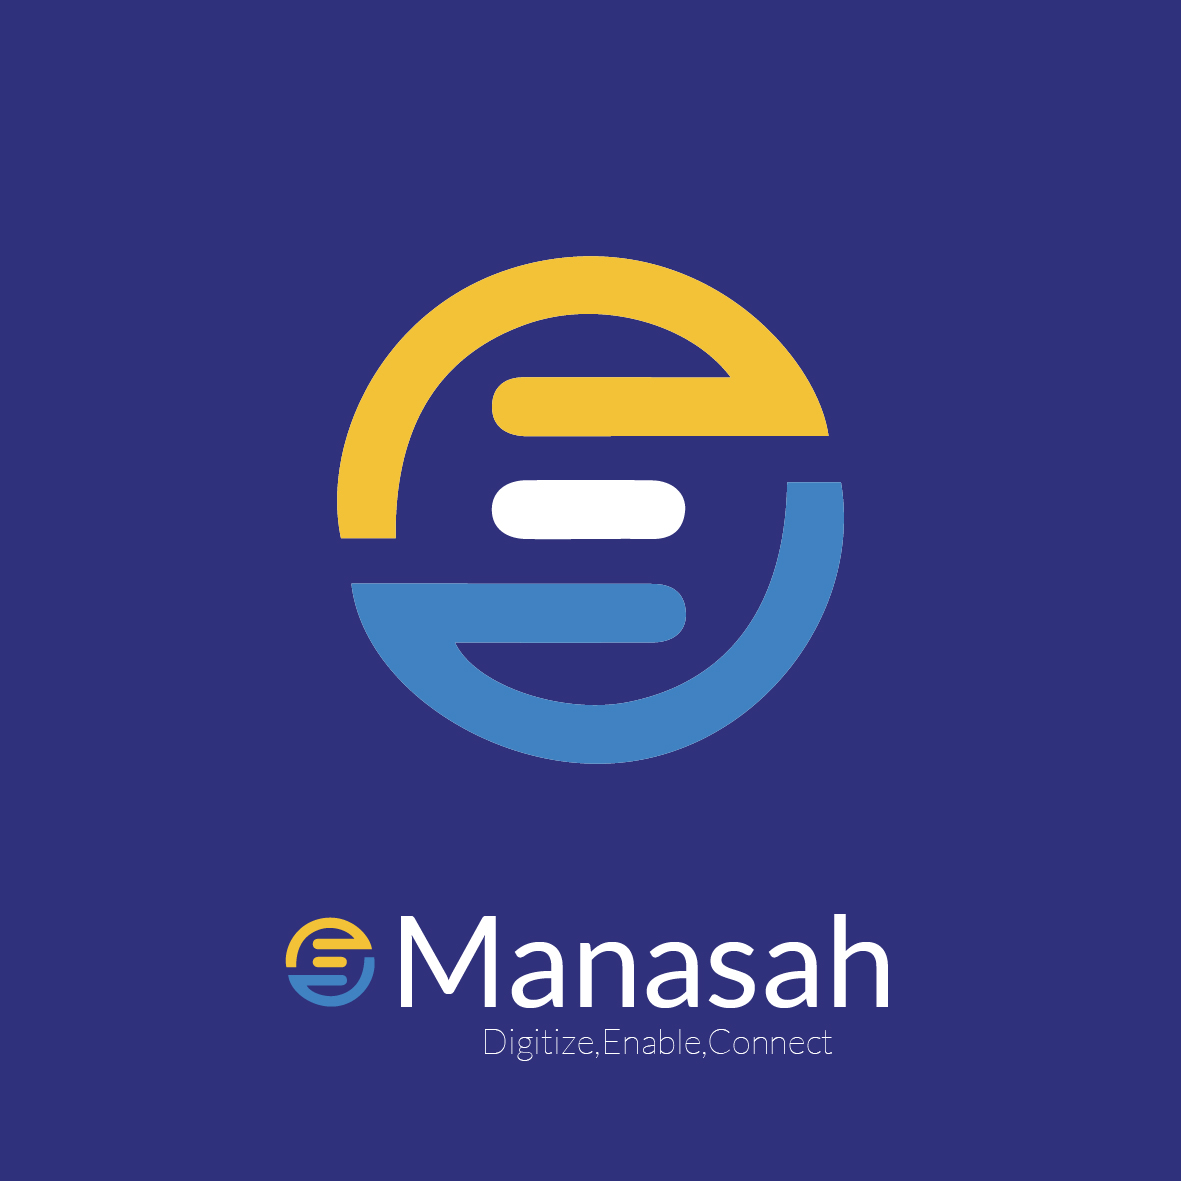 eManasah